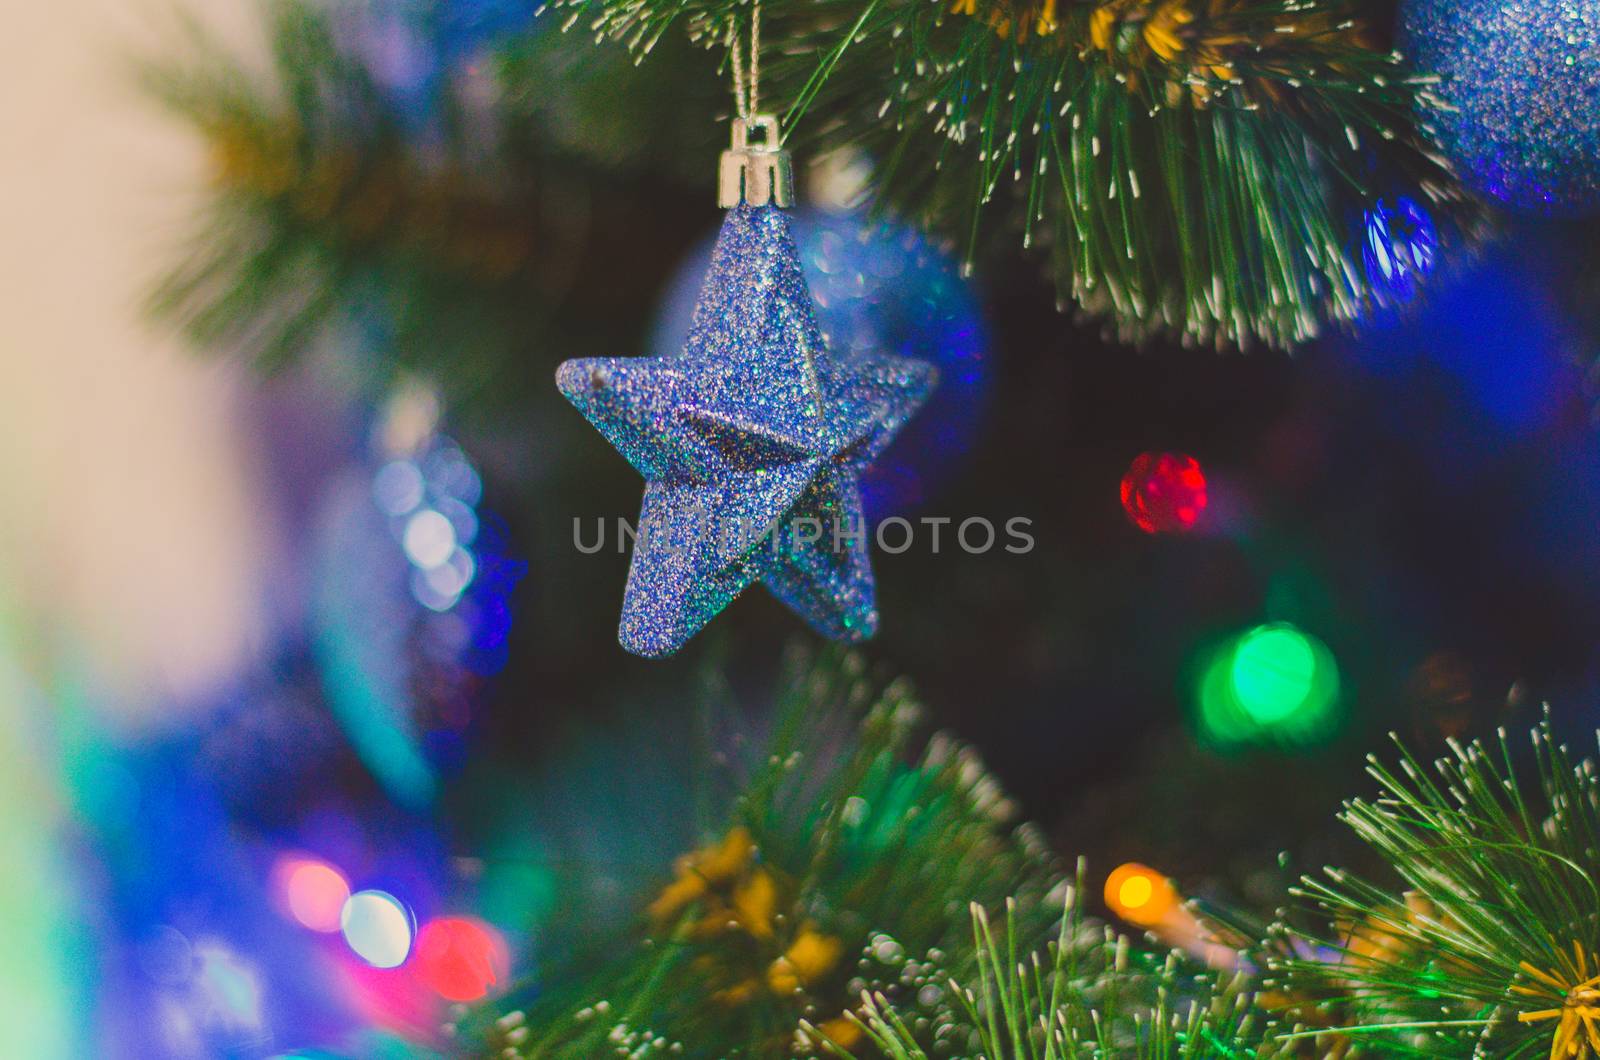 Blue star - Christmas tree toy by chernobrovin